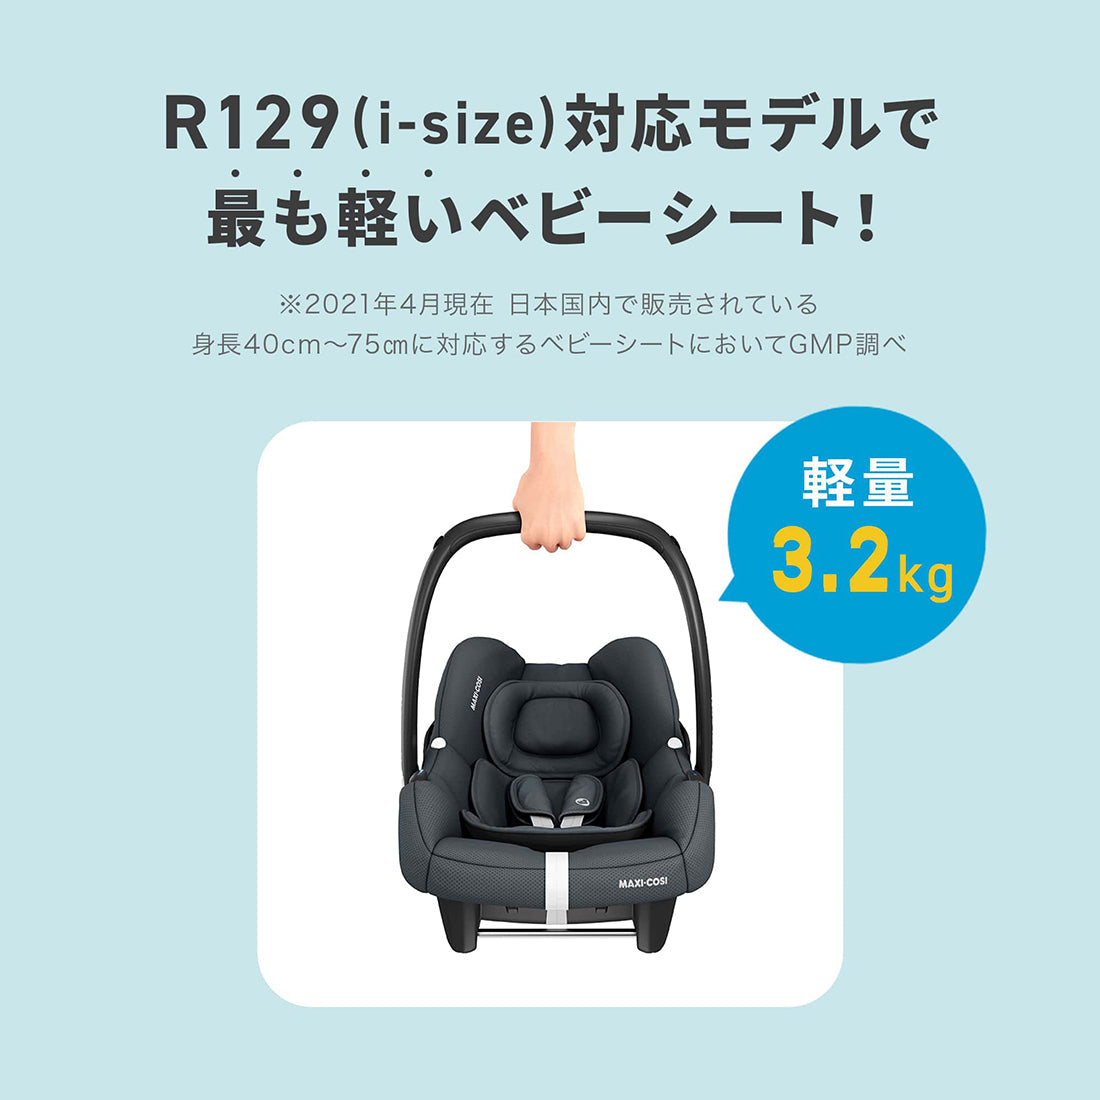 【R129（i-size）対応モデルで最も軽いベビーシート！】※2021年4月現在　日本国内で販売されている身長40cm〜75cmに対応するベビーシートにおいてGMP調べ　軽量3.2kg